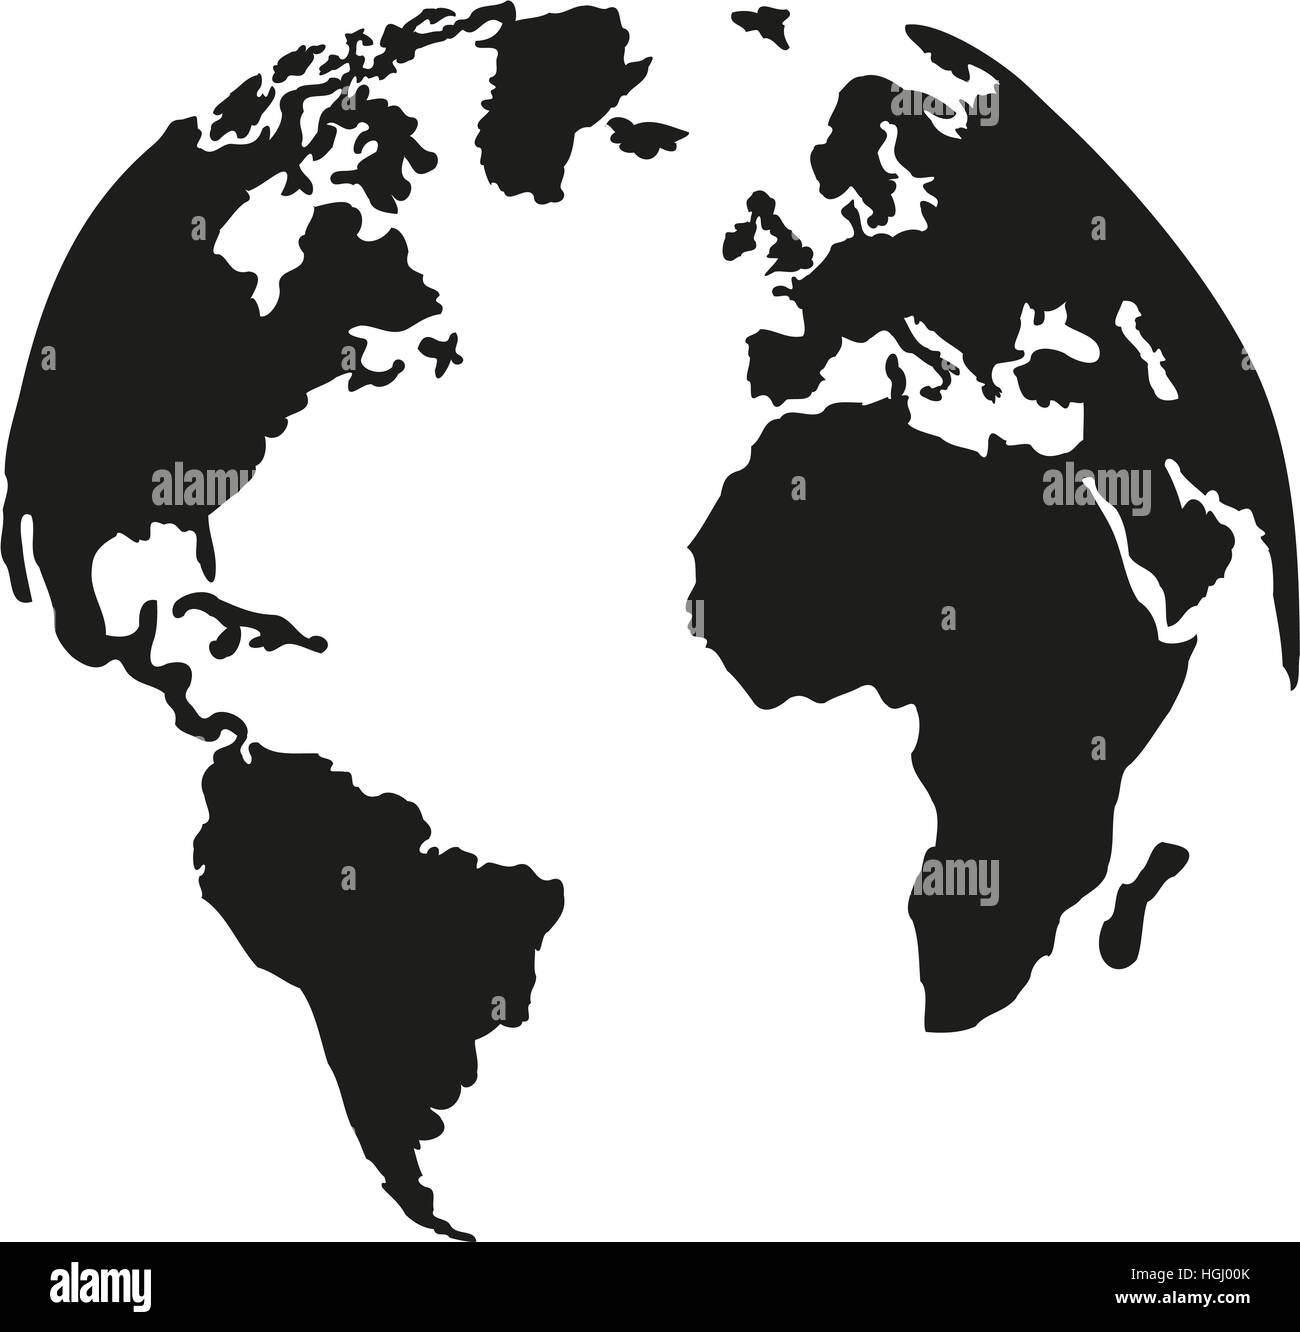 Planeta planeta tierra con la silueta de los continentes Foto de stock